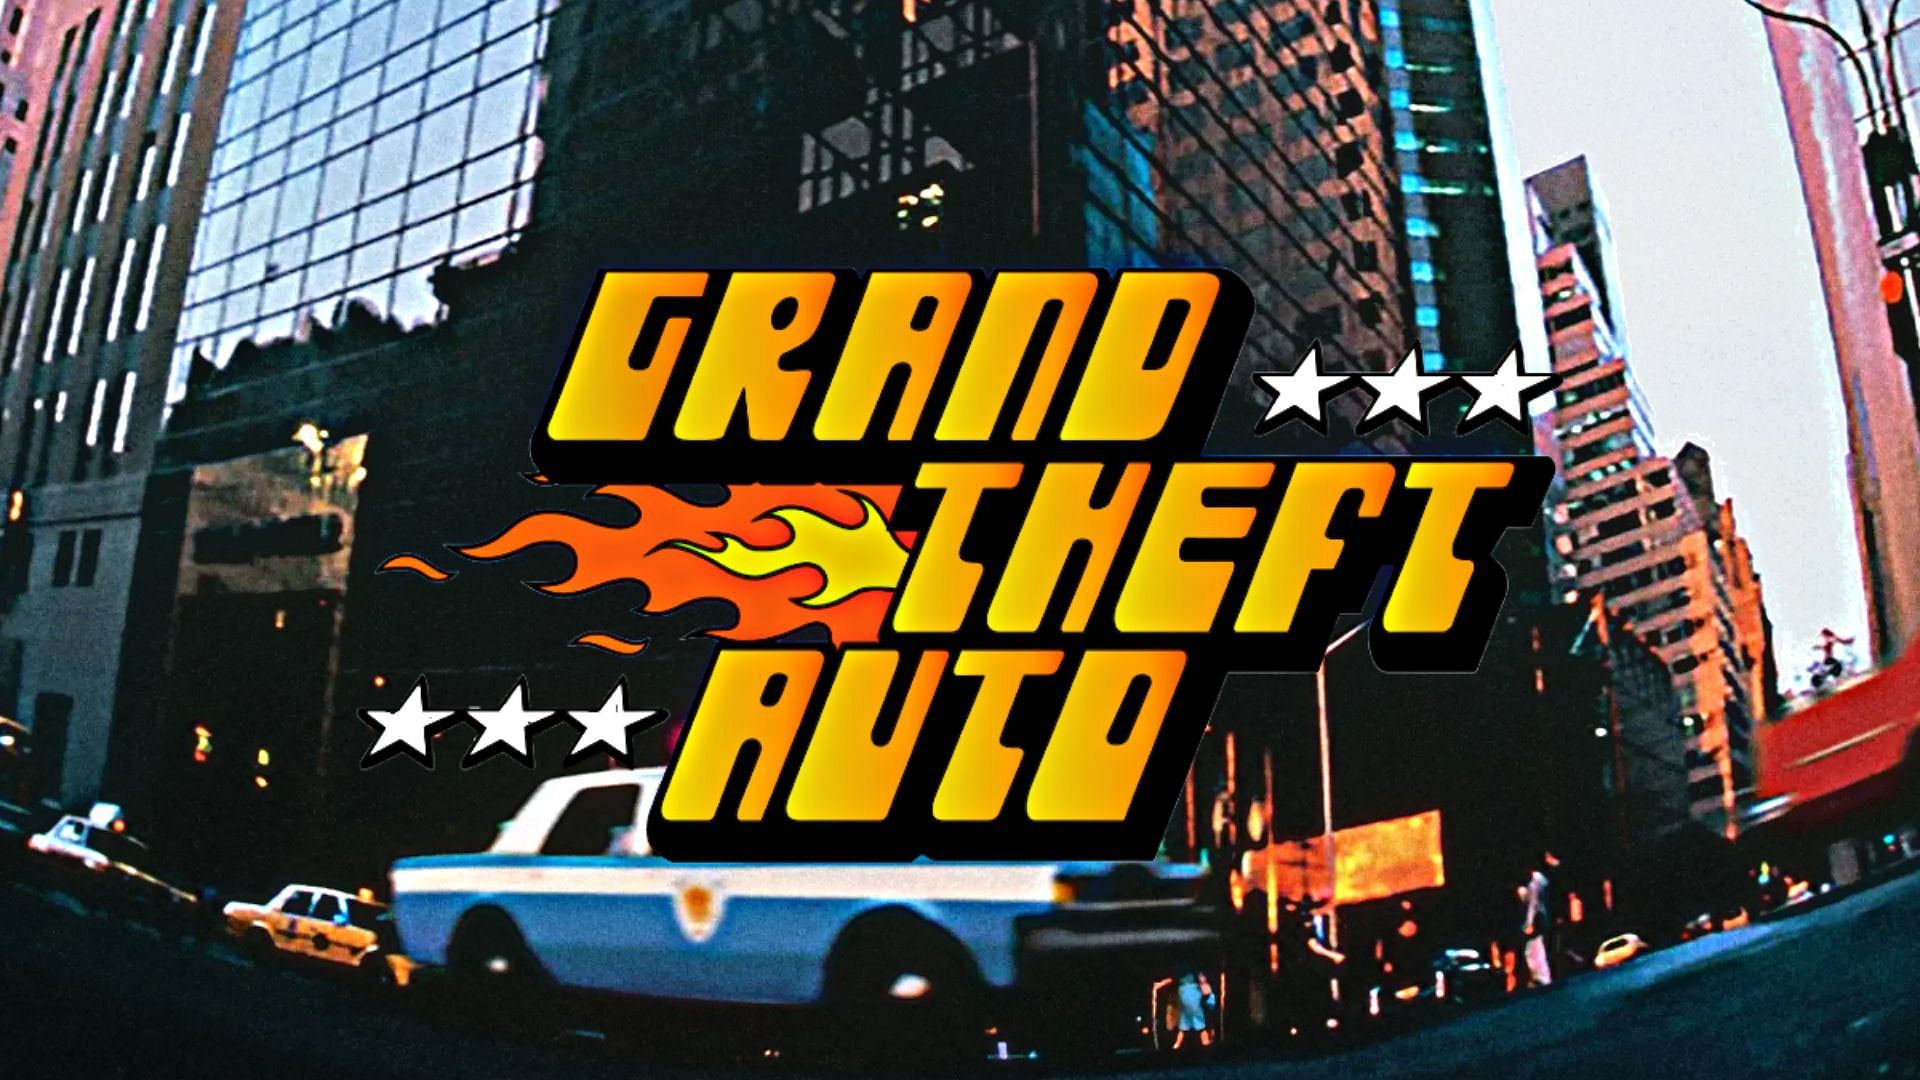 Grand Theft Auto was released in 1997 (Image via Sportskeeda)